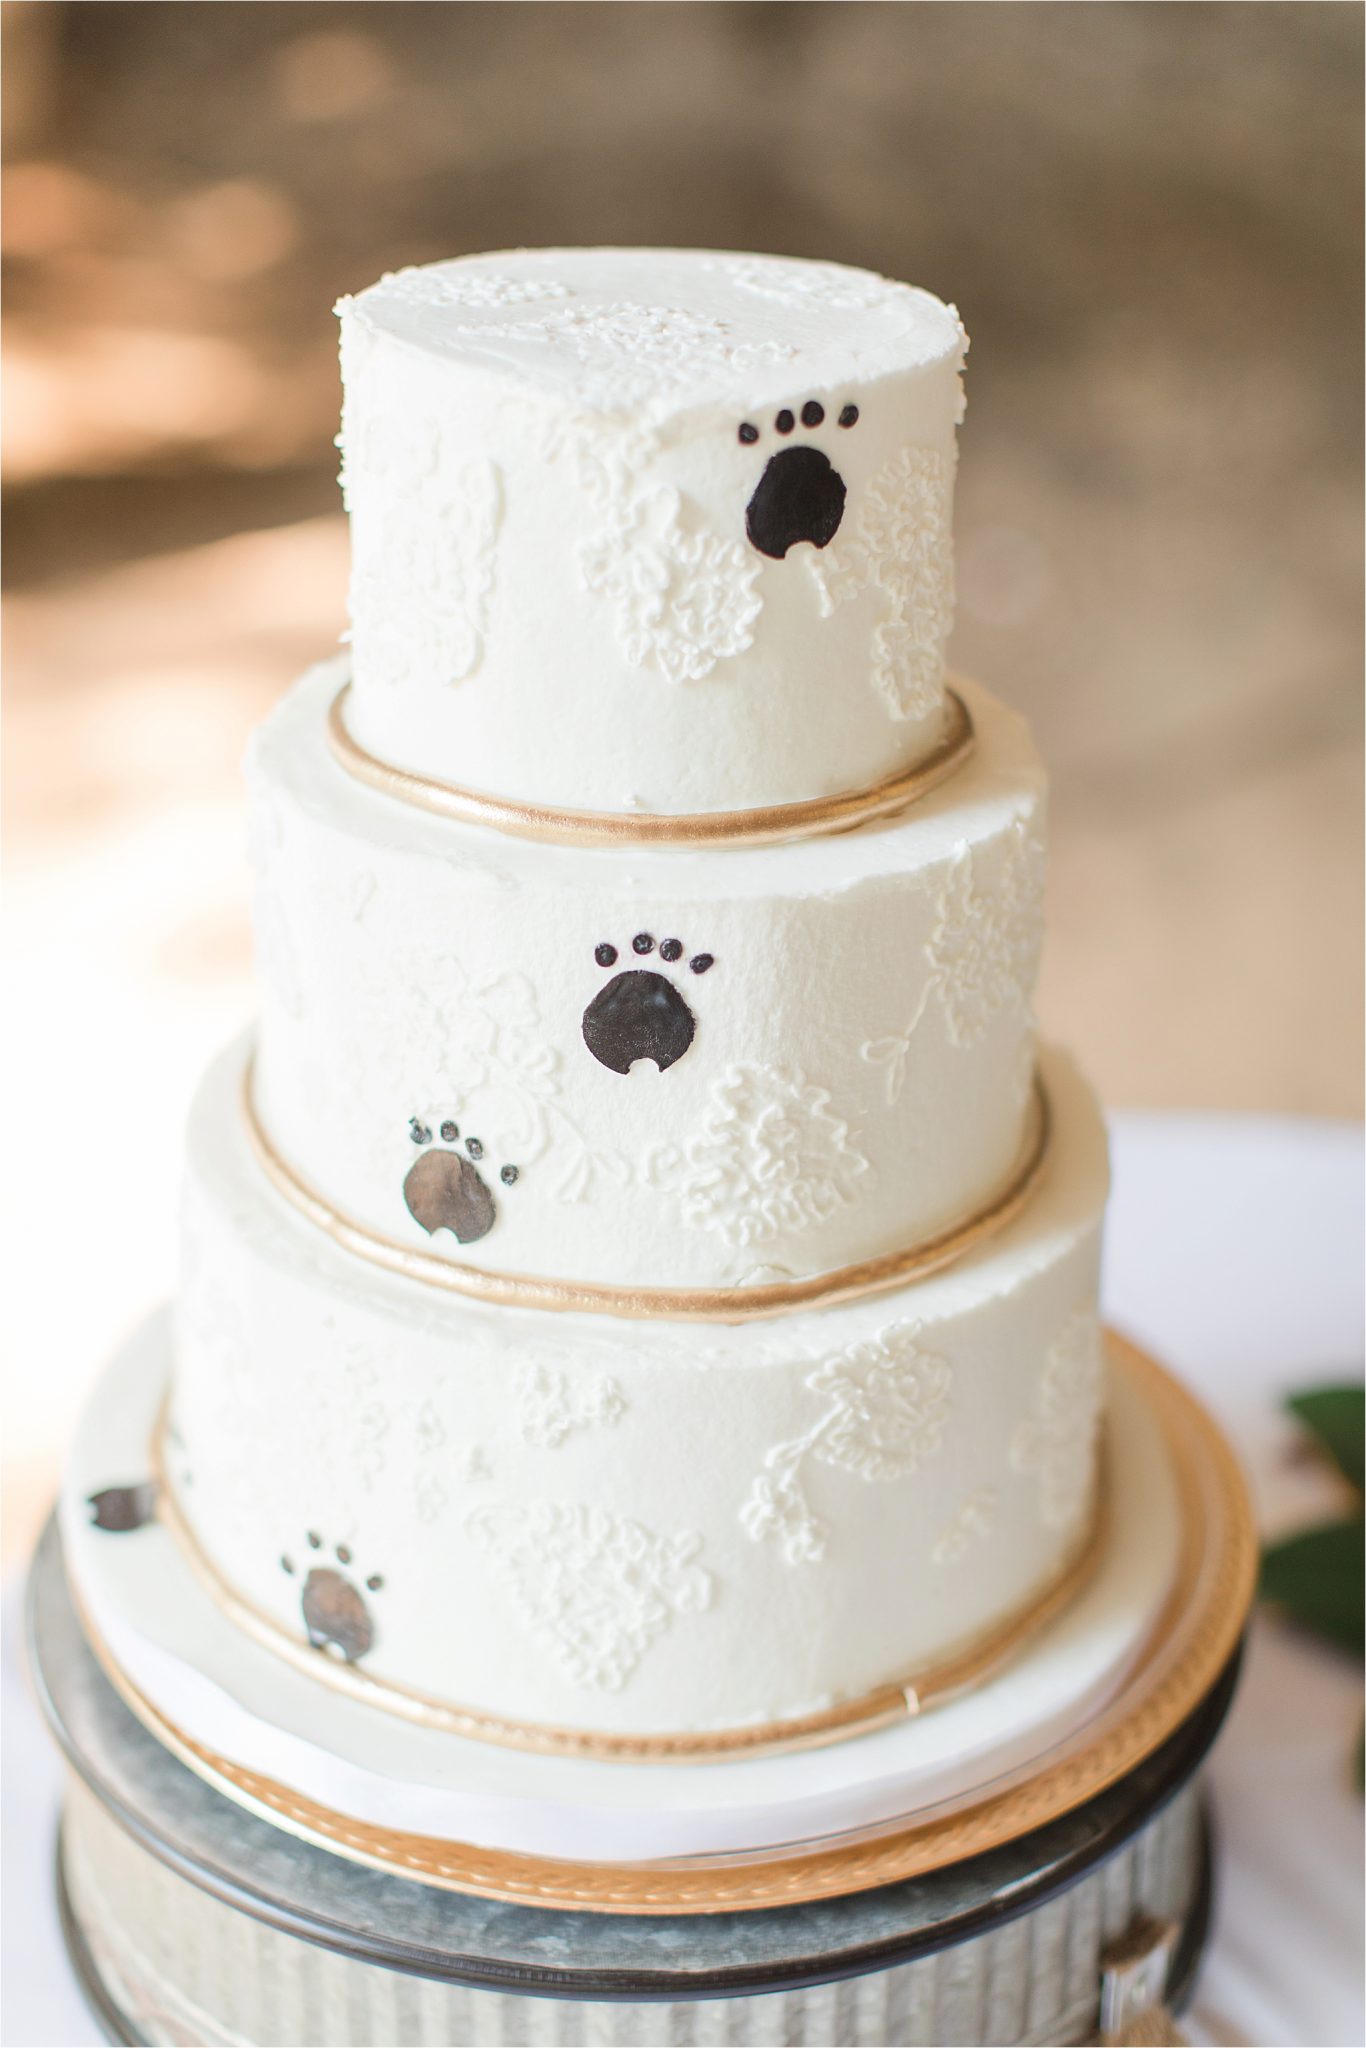 wedding cake-paw prints-dog cake-three tier wedding cake-gold accents